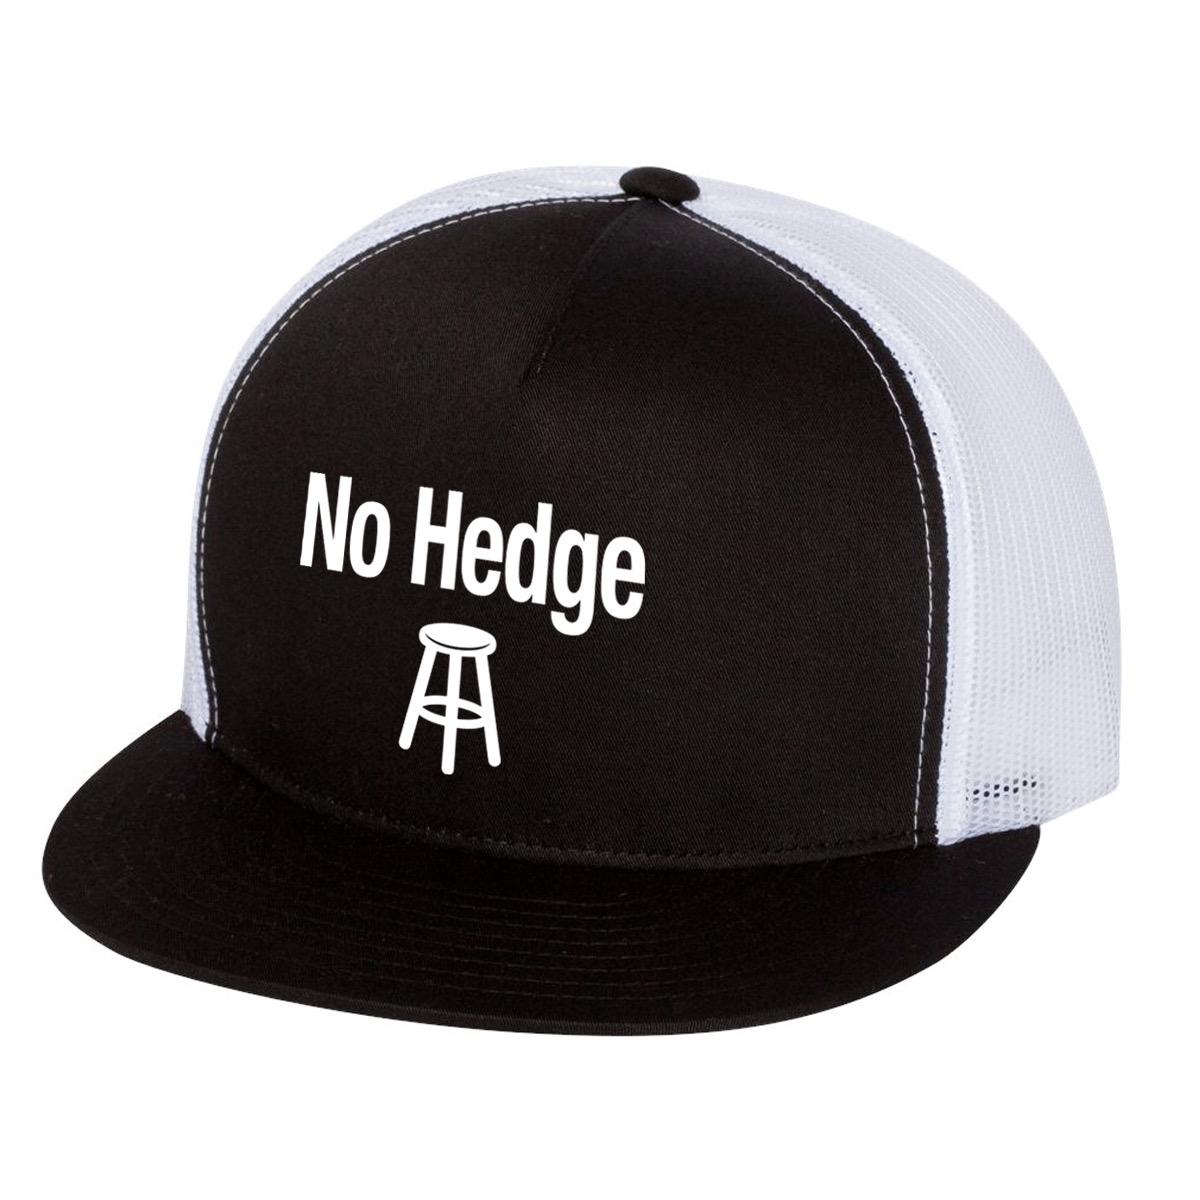 Mr. Ice No Hedge Trucker Hat-Hats-Barstool Sports-Black-One Size-Barstool Sports